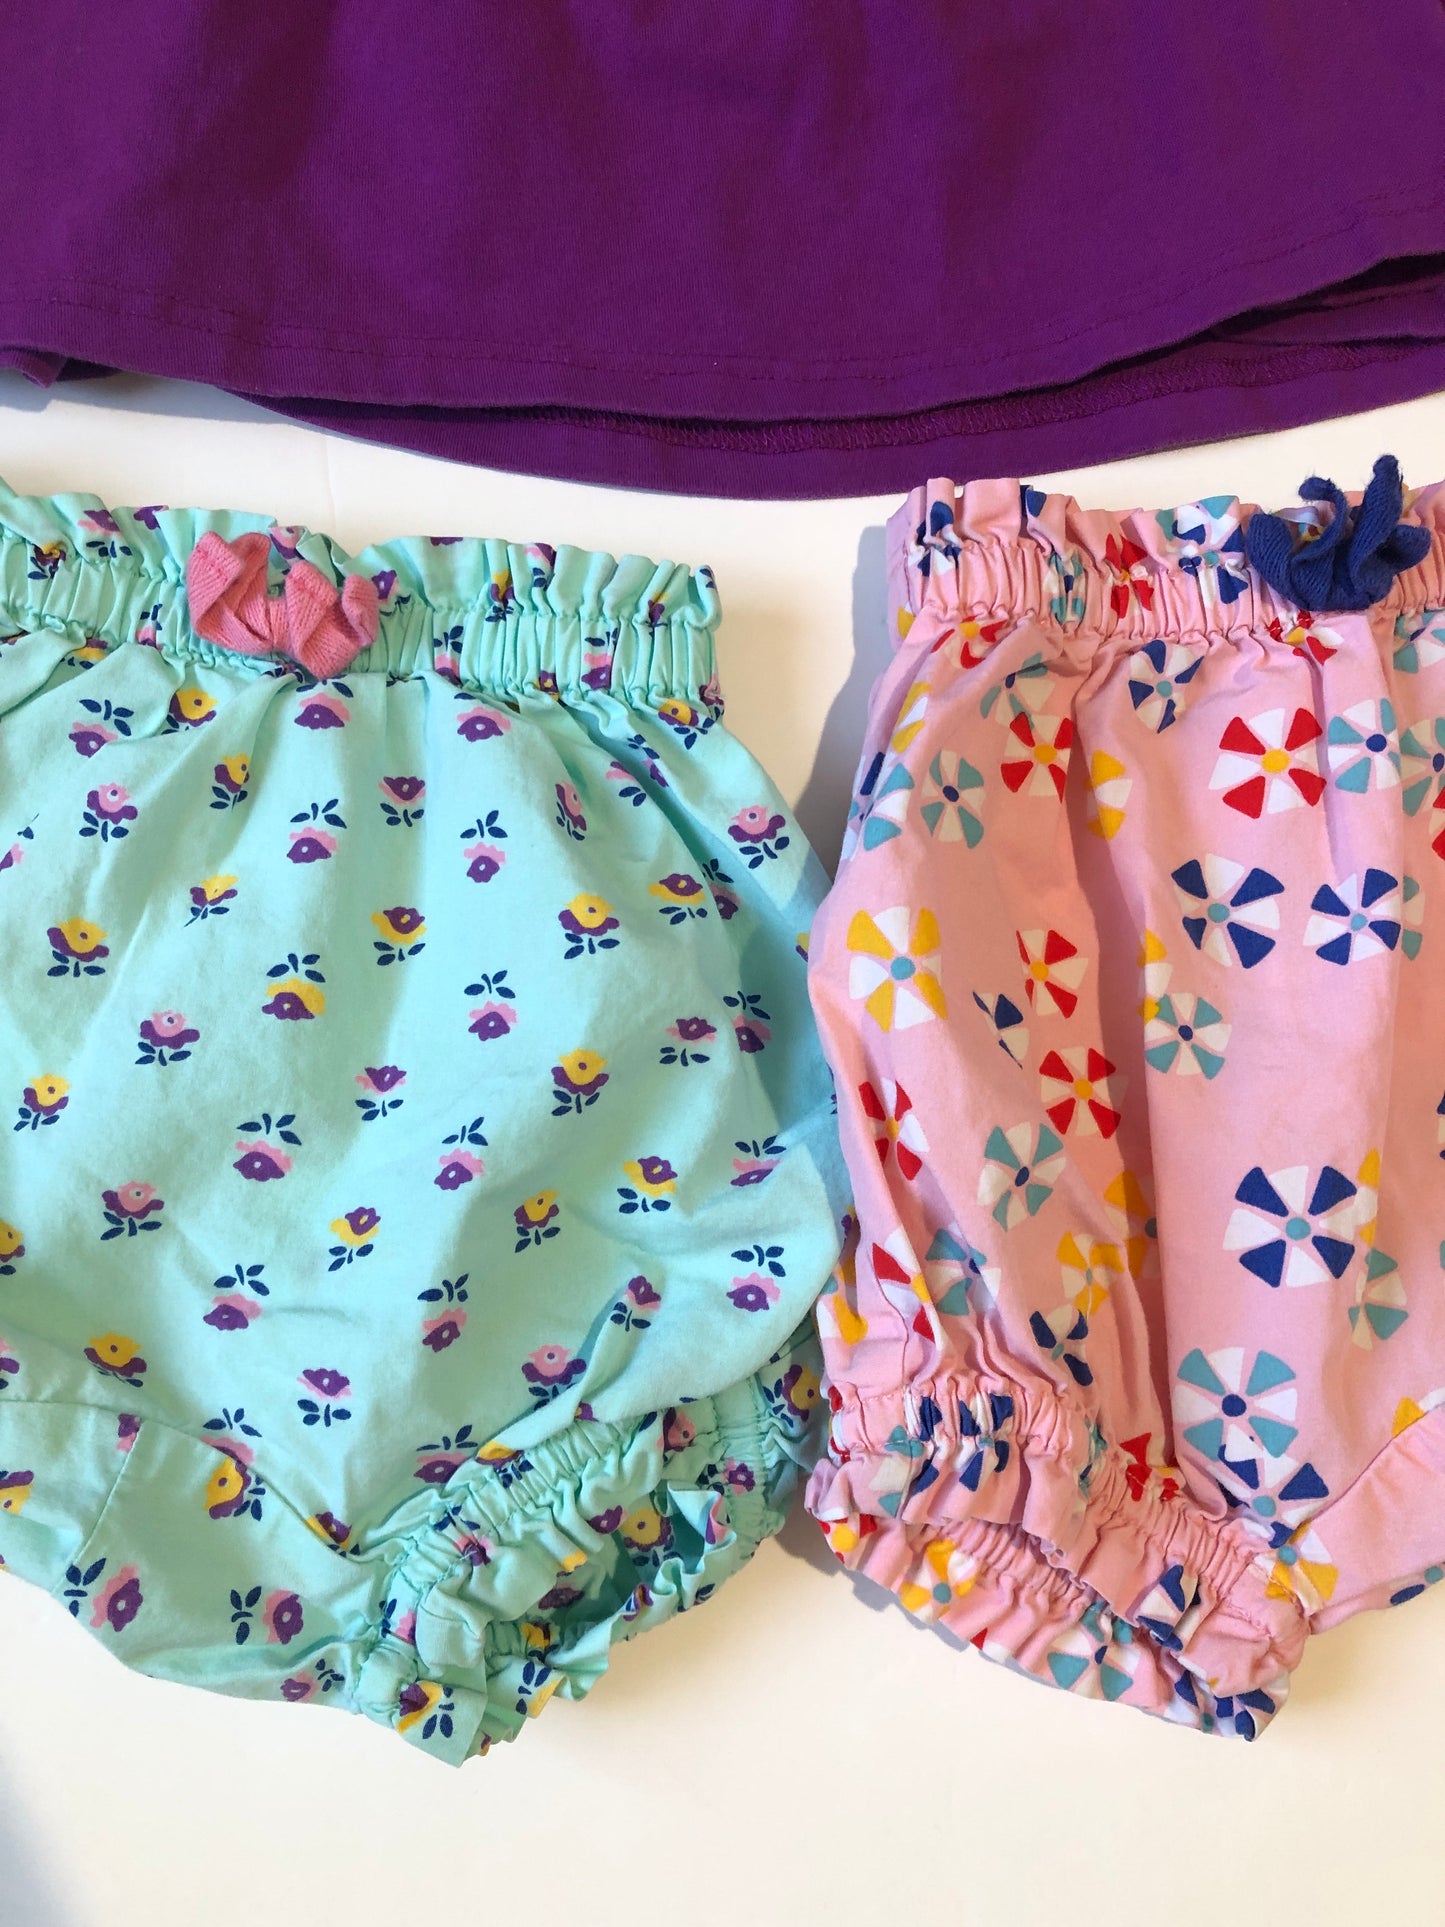 12-18 month girls Hanna shorts and purple boutique shirt set